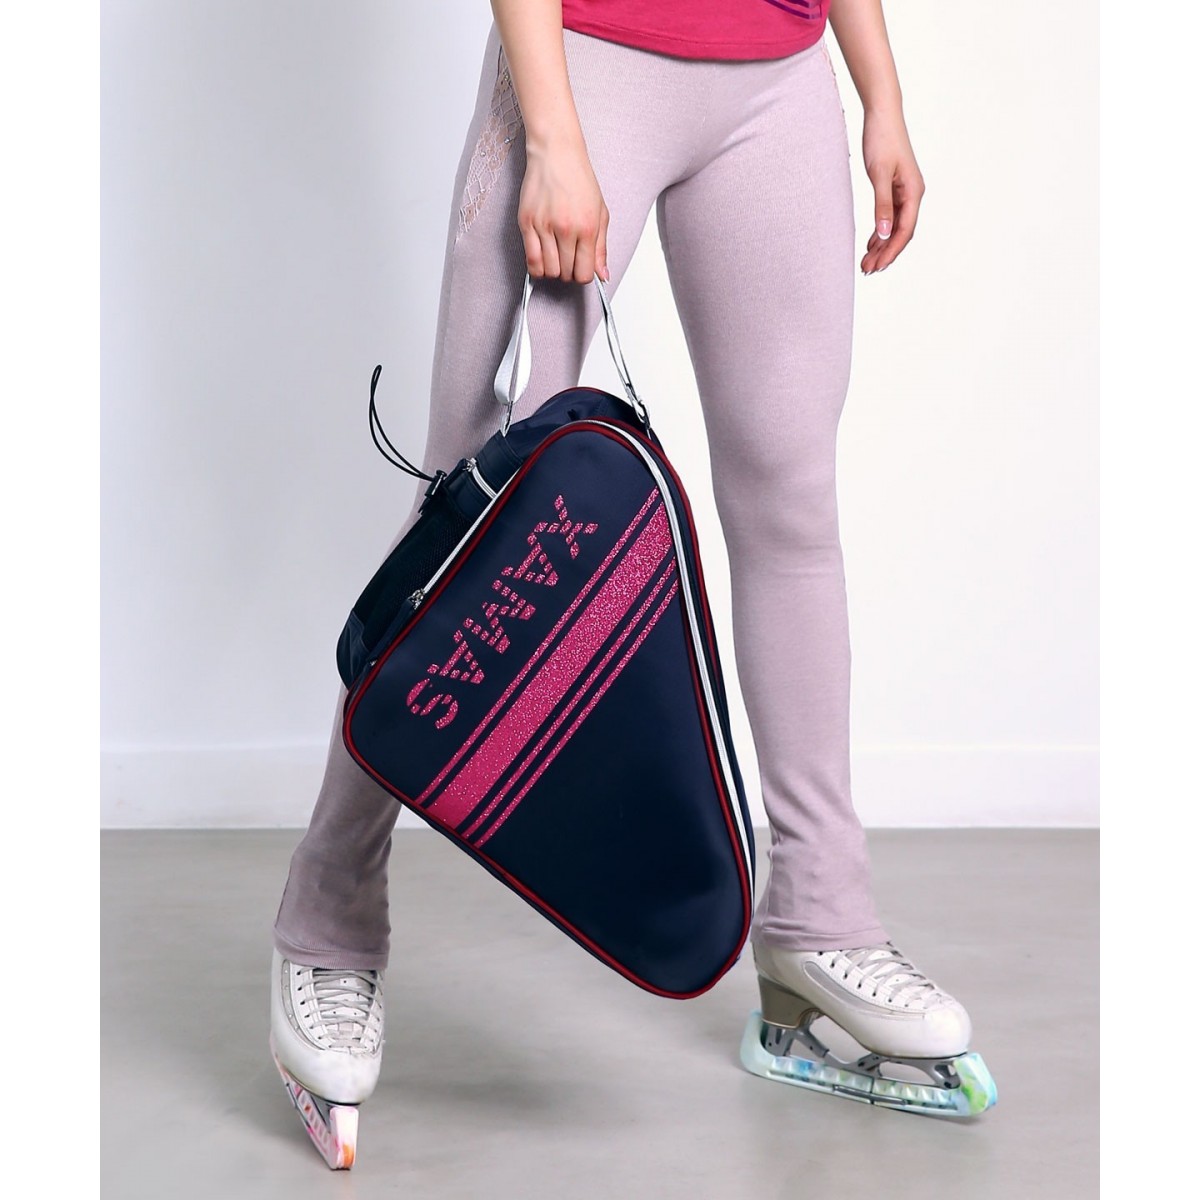 Edea Cube Accessory Skate Bag